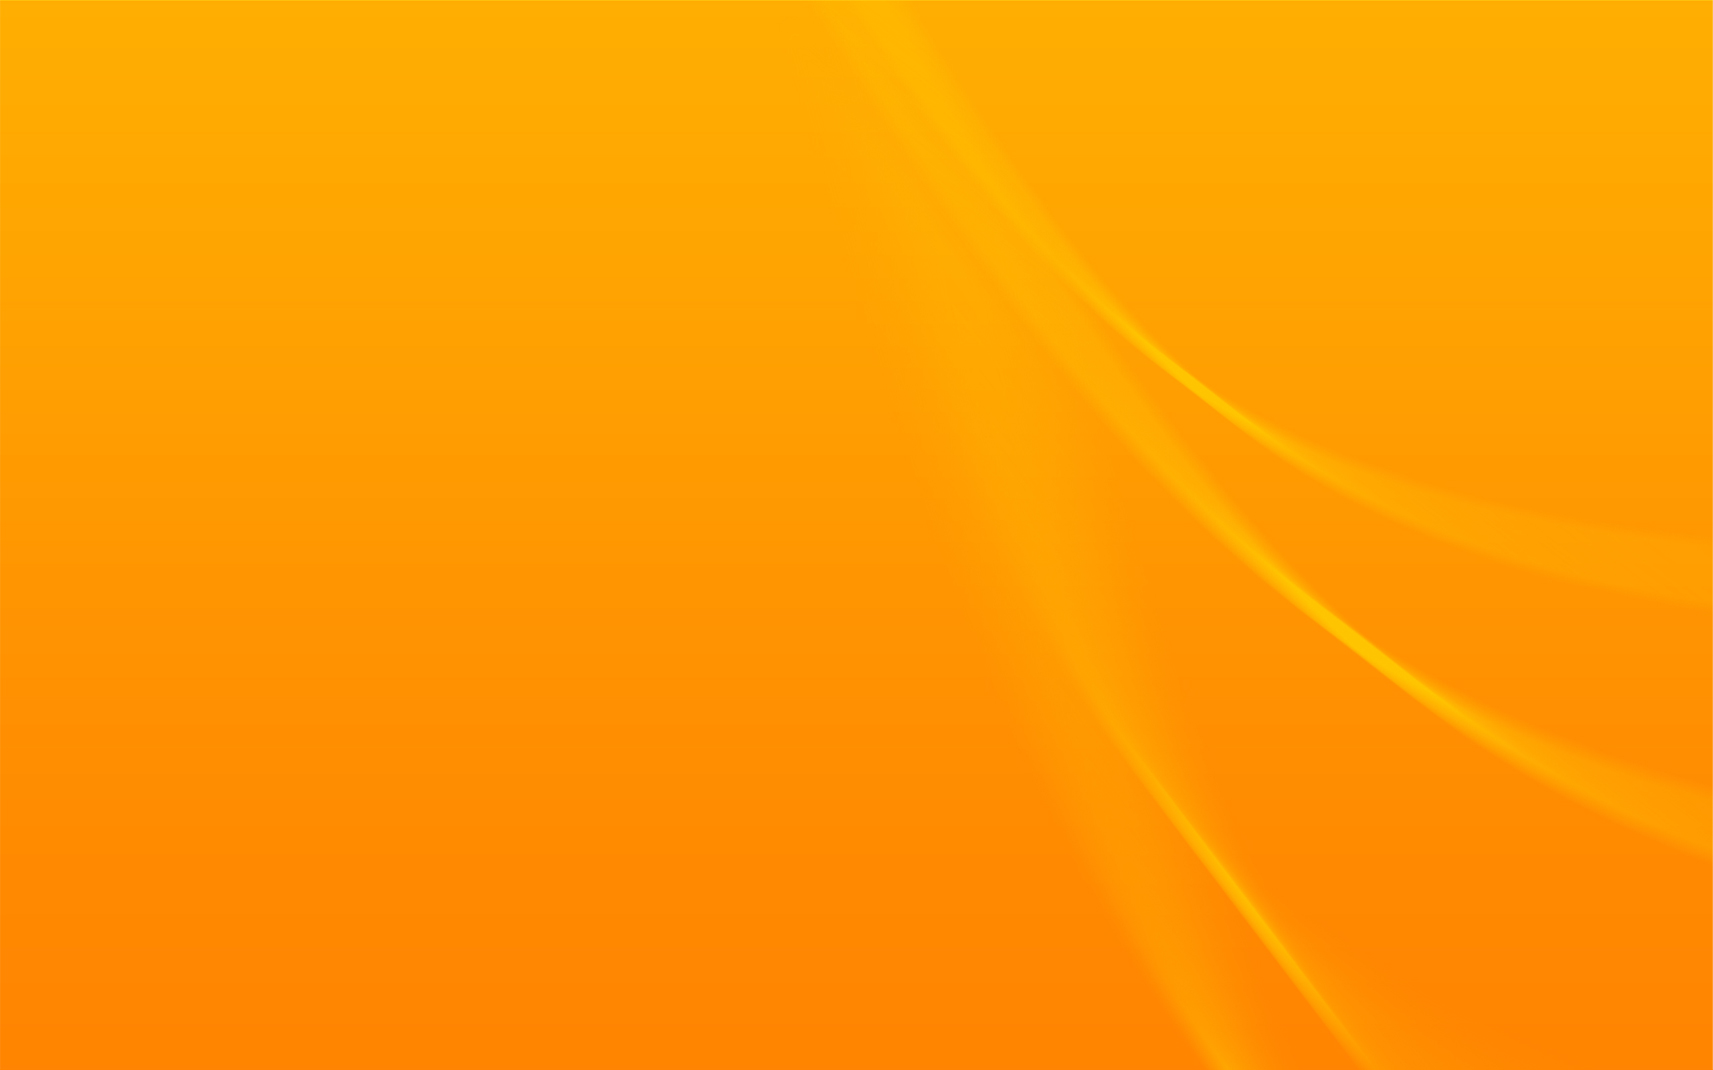 Orange desktop backgrounds